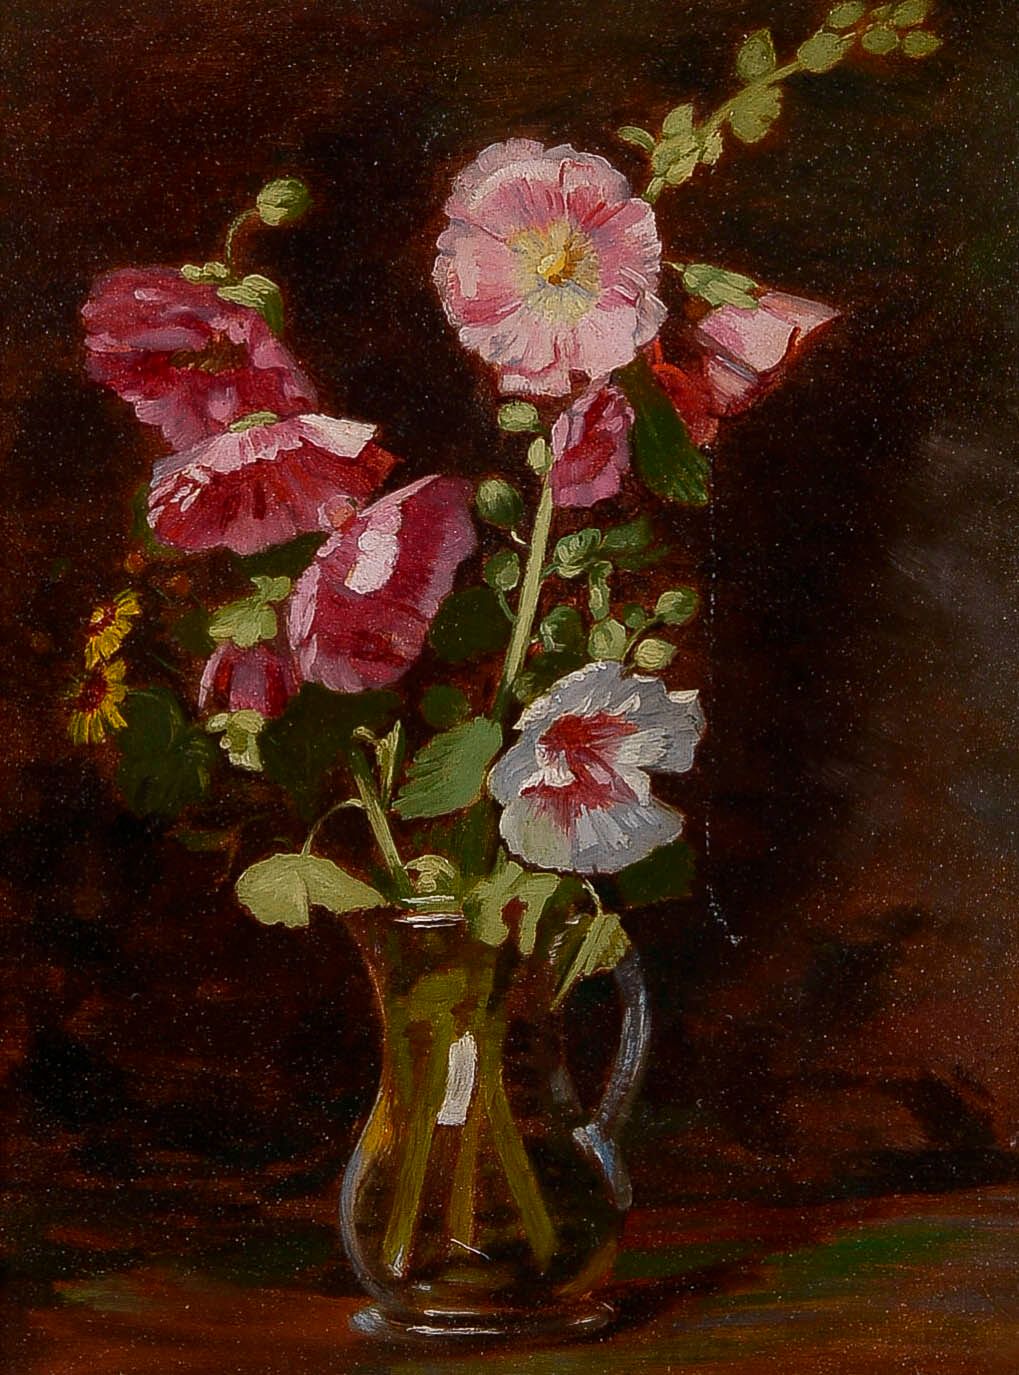 Null 安托万-贝尔琼 (1754-1843)

玻璃瓶中的冬青花

纸上油画，装在画布上，右侧有两次墨水签名

31,3 x 24 cm